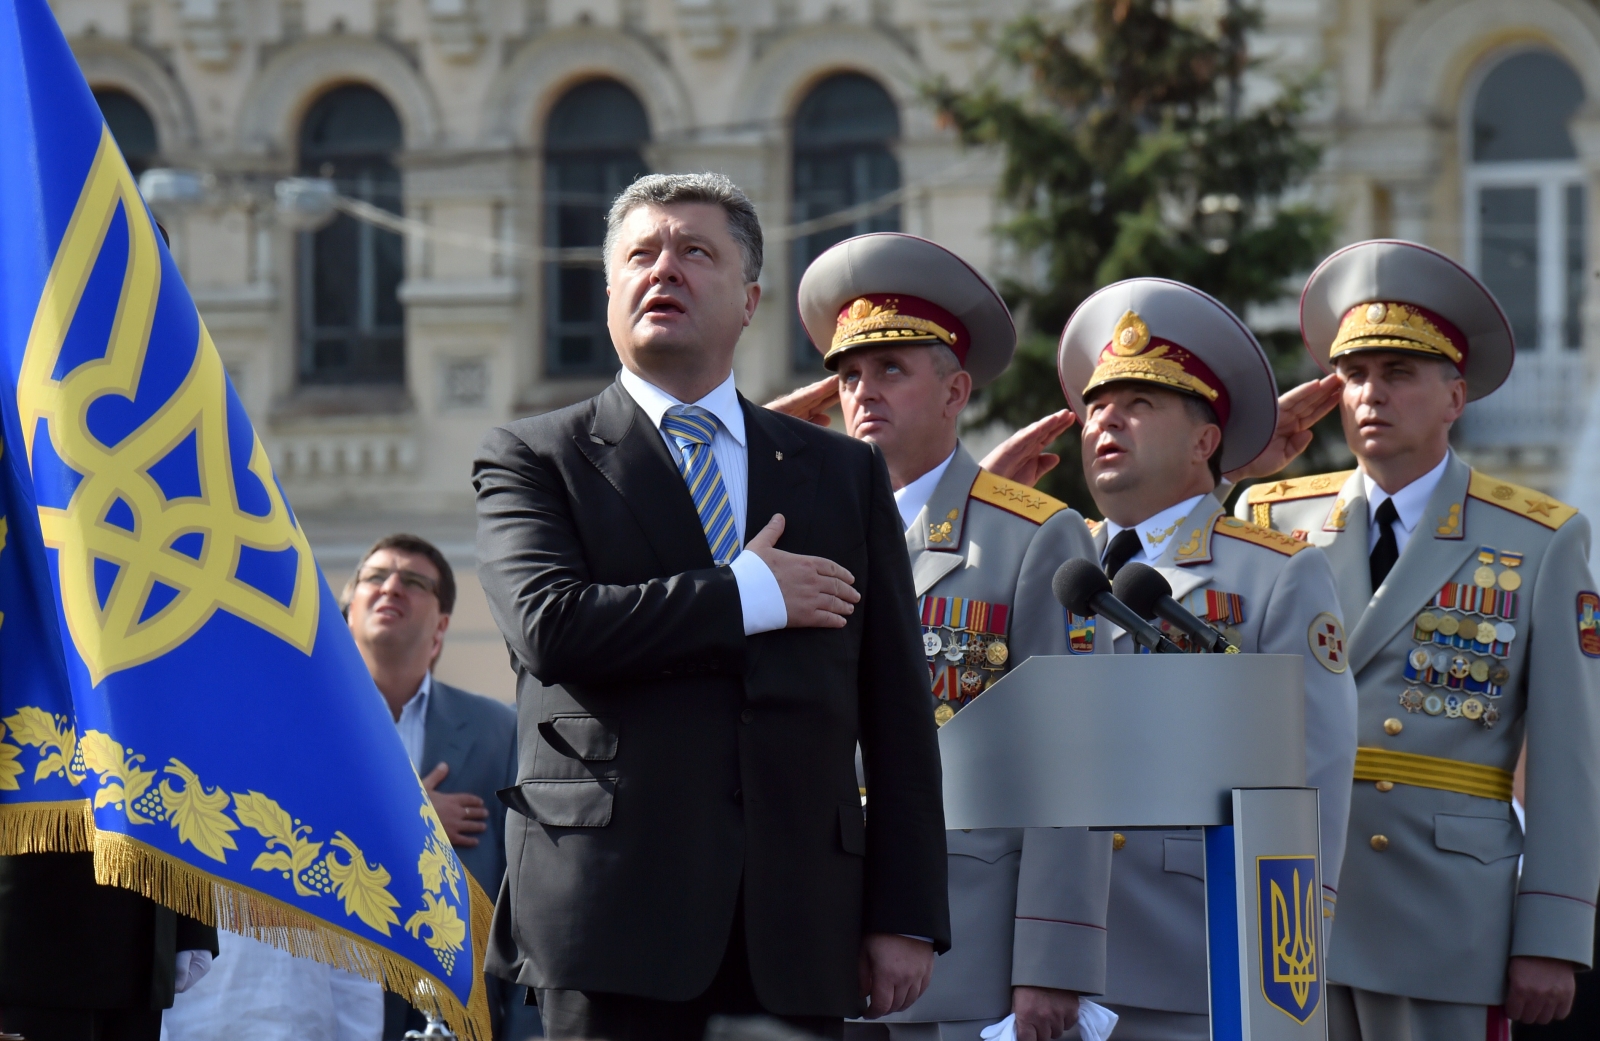 Ukraine Independence Day Parade President Poroshenko